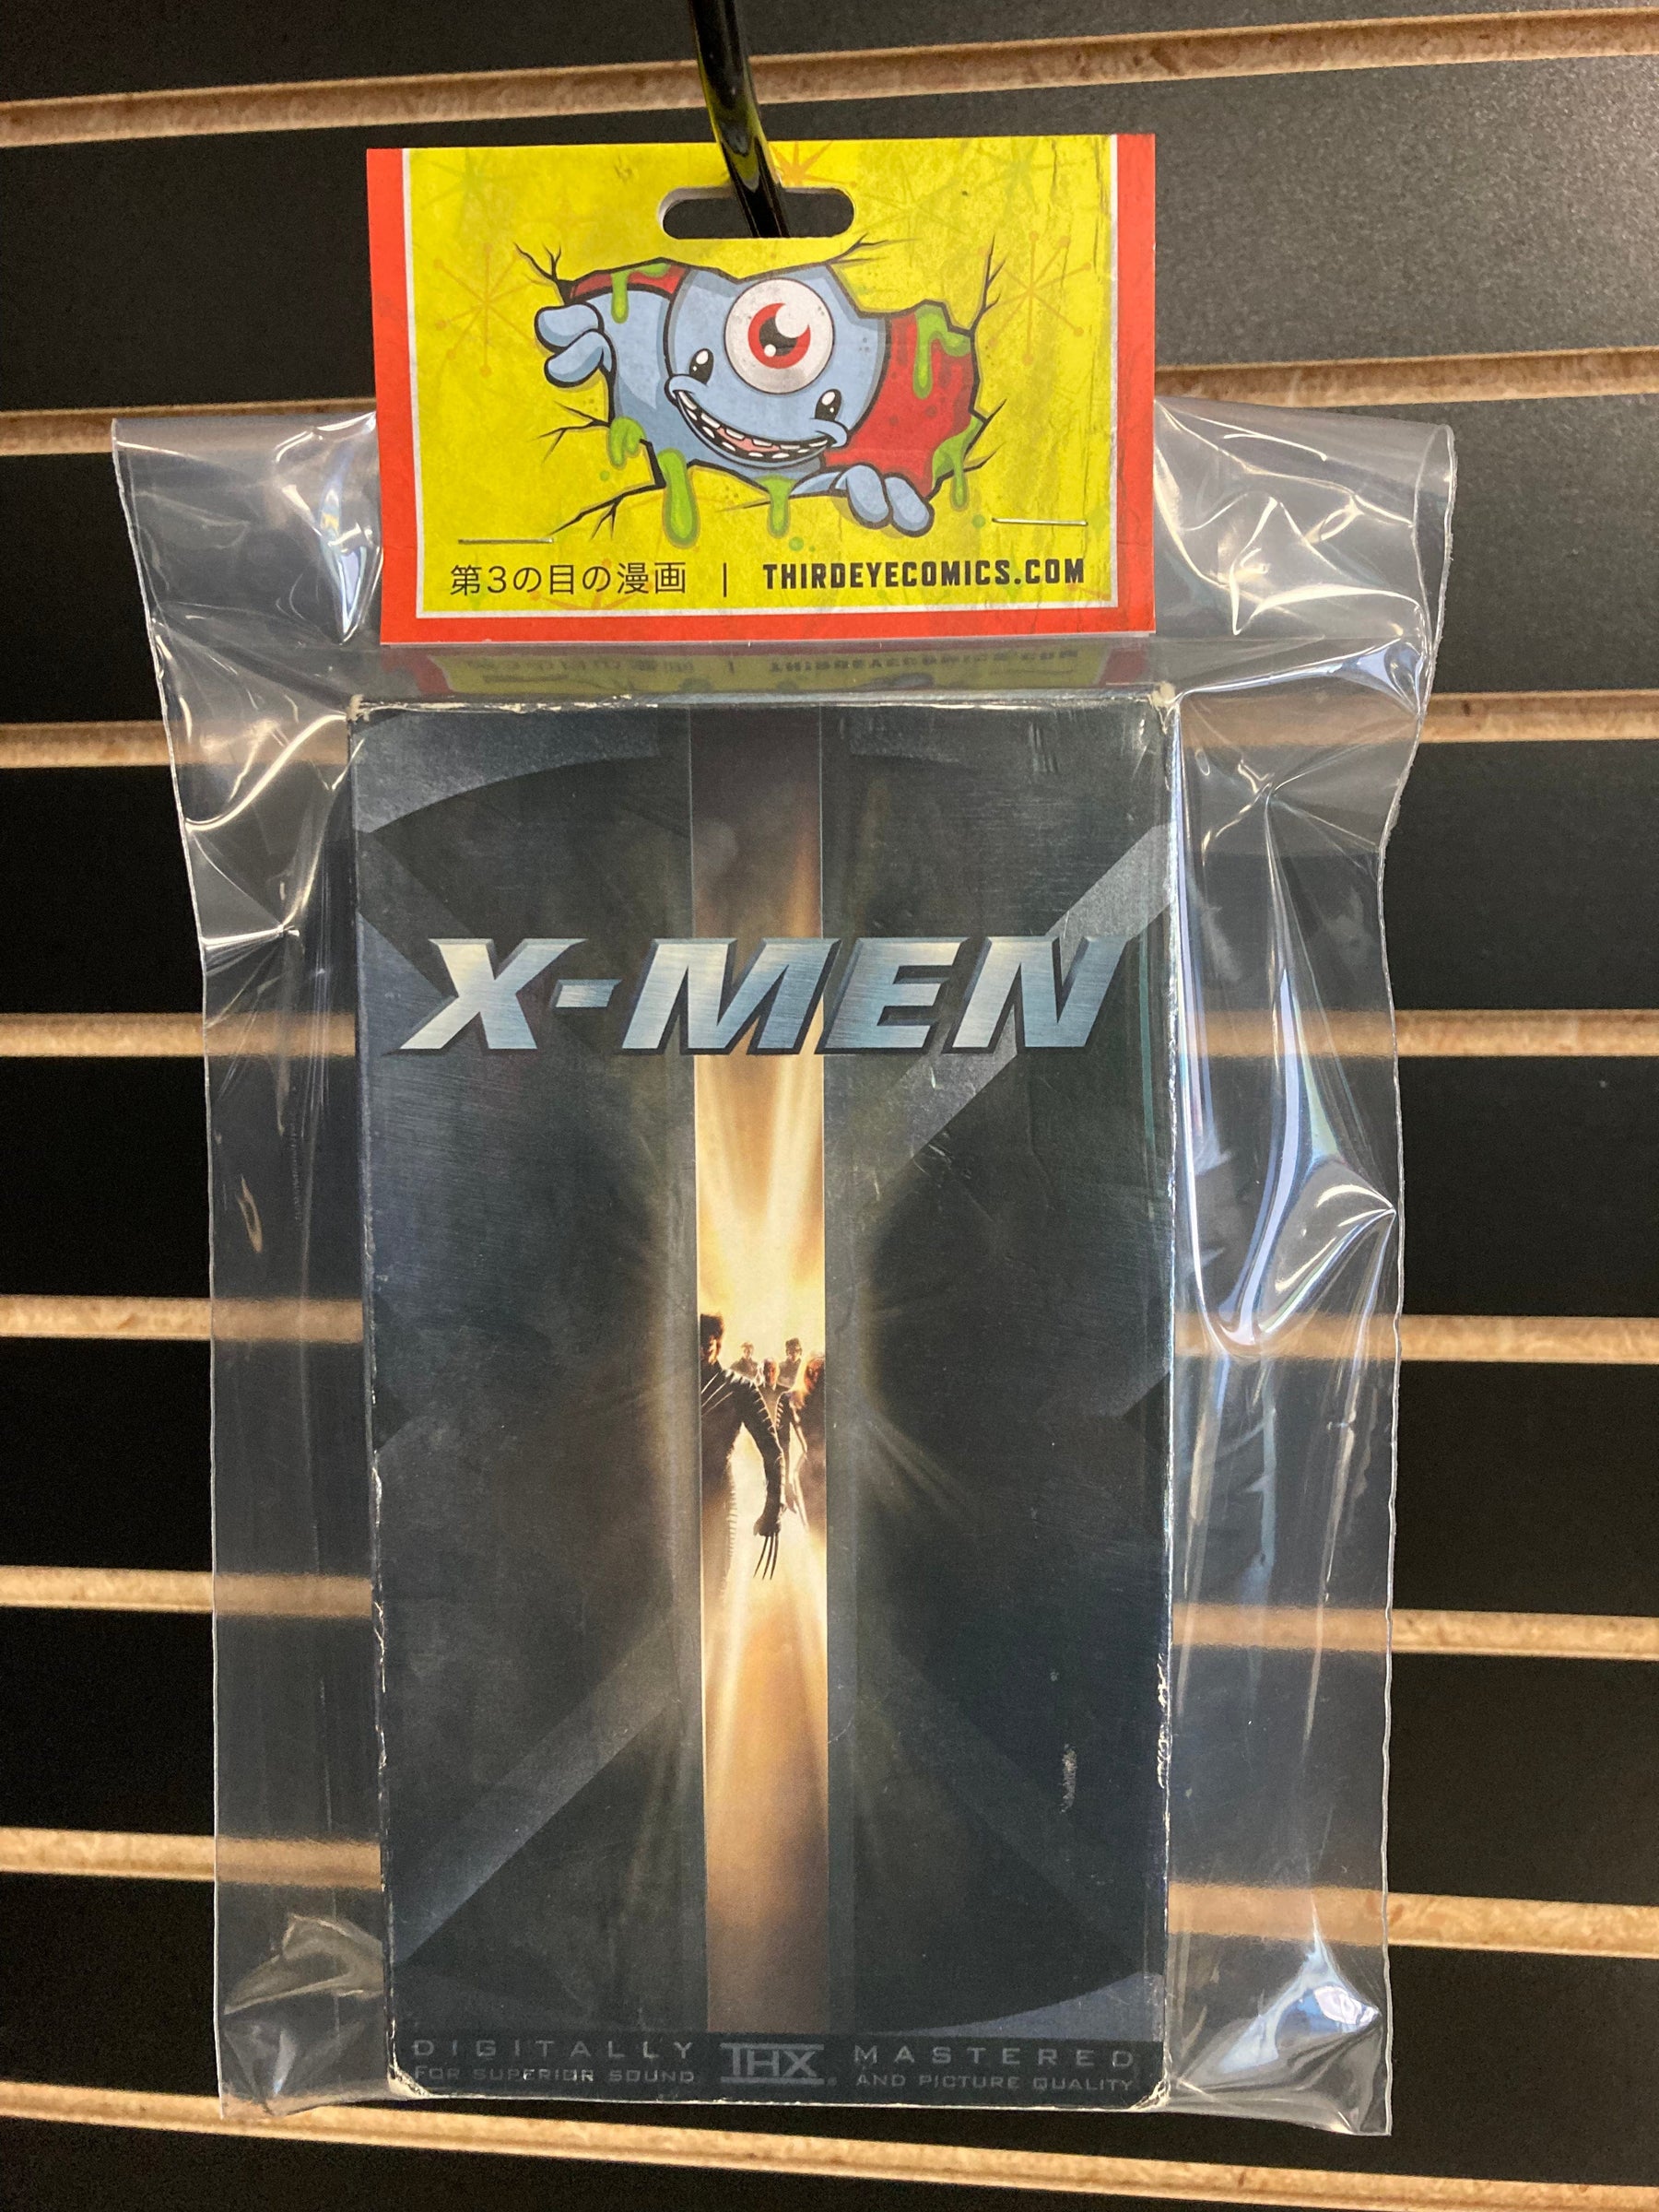 VHS: X-MEN - Third Eye